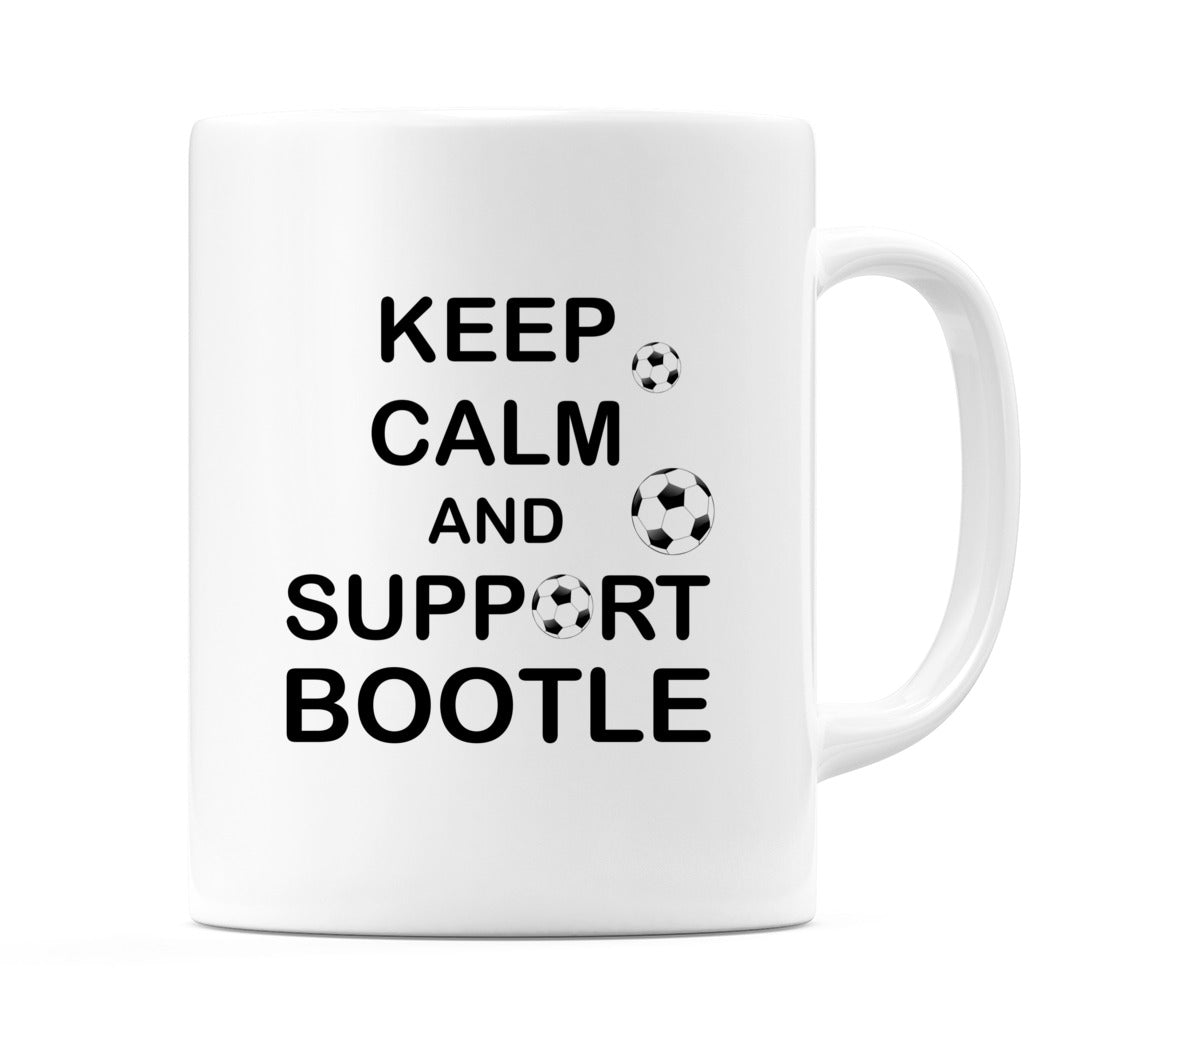 Keep Calm And Support Bootle Mug